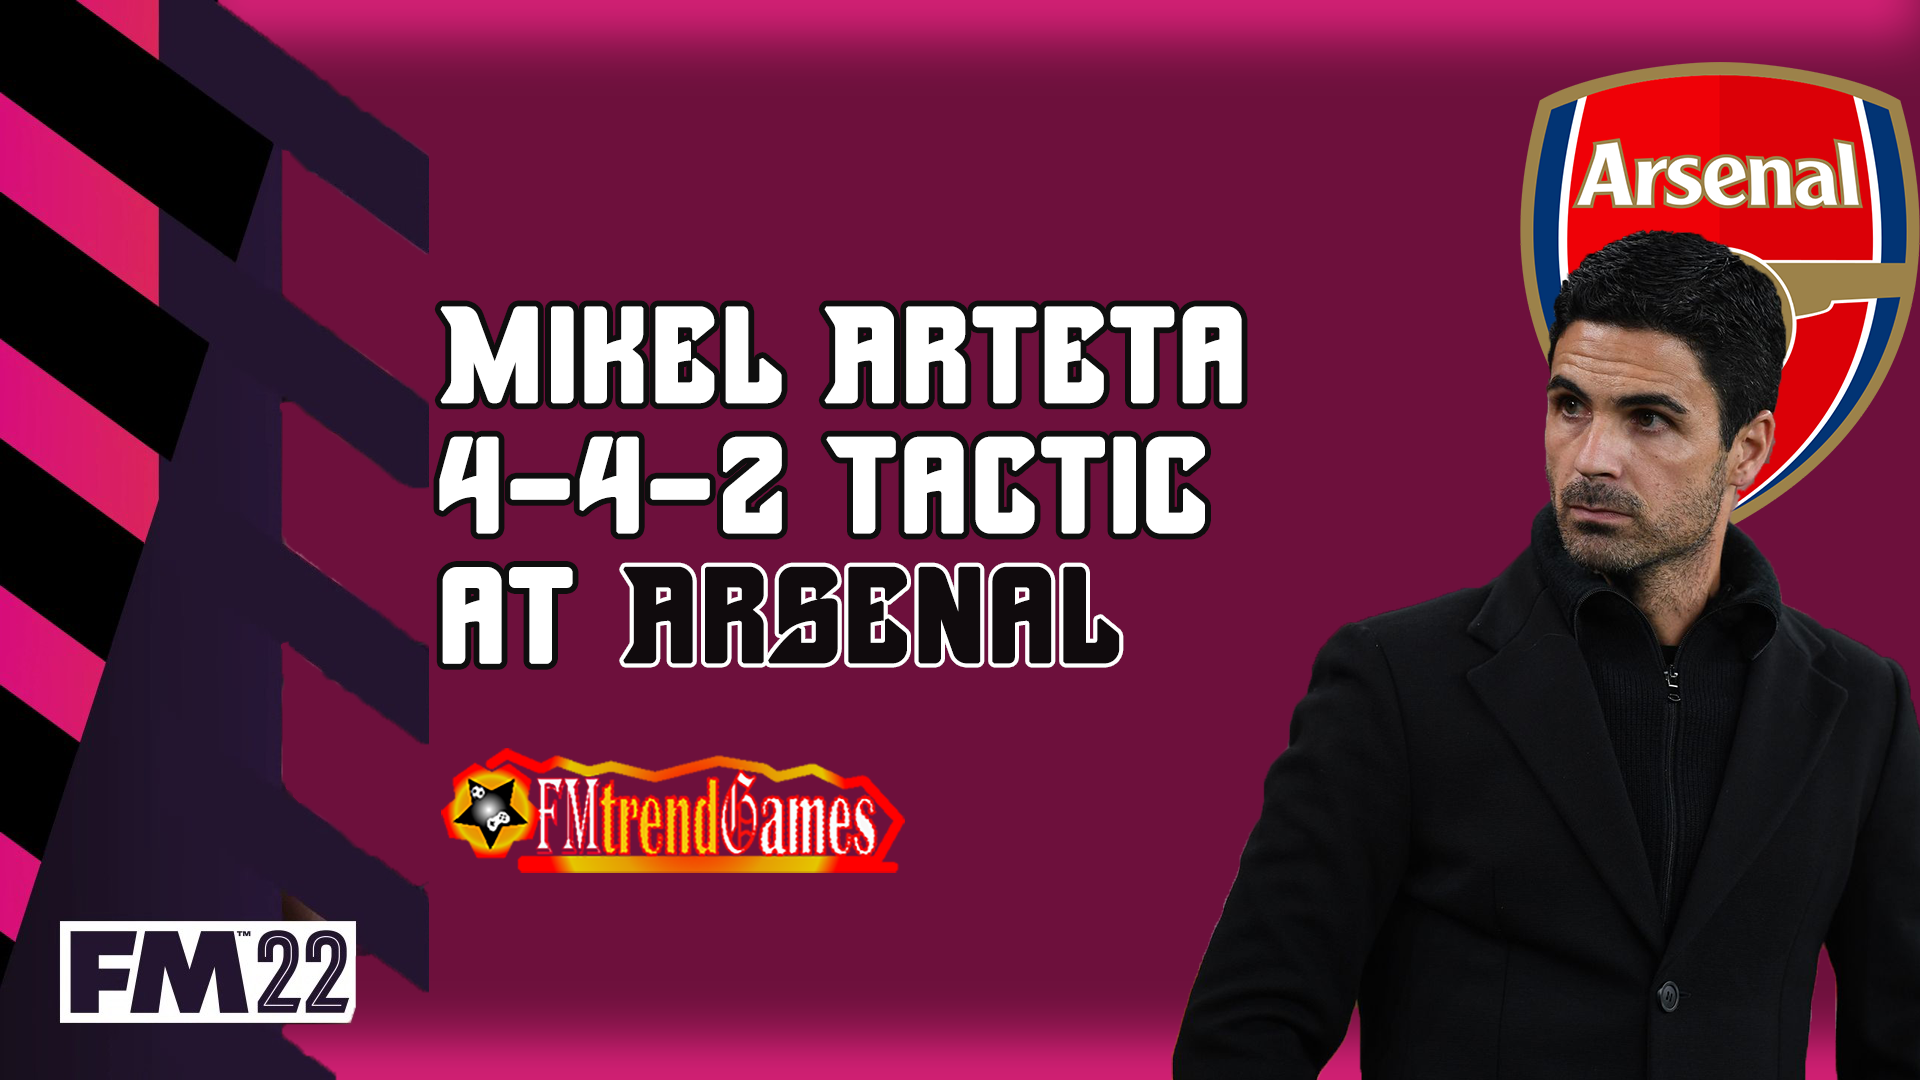 FM22 Mikel Arteta 4-4-2